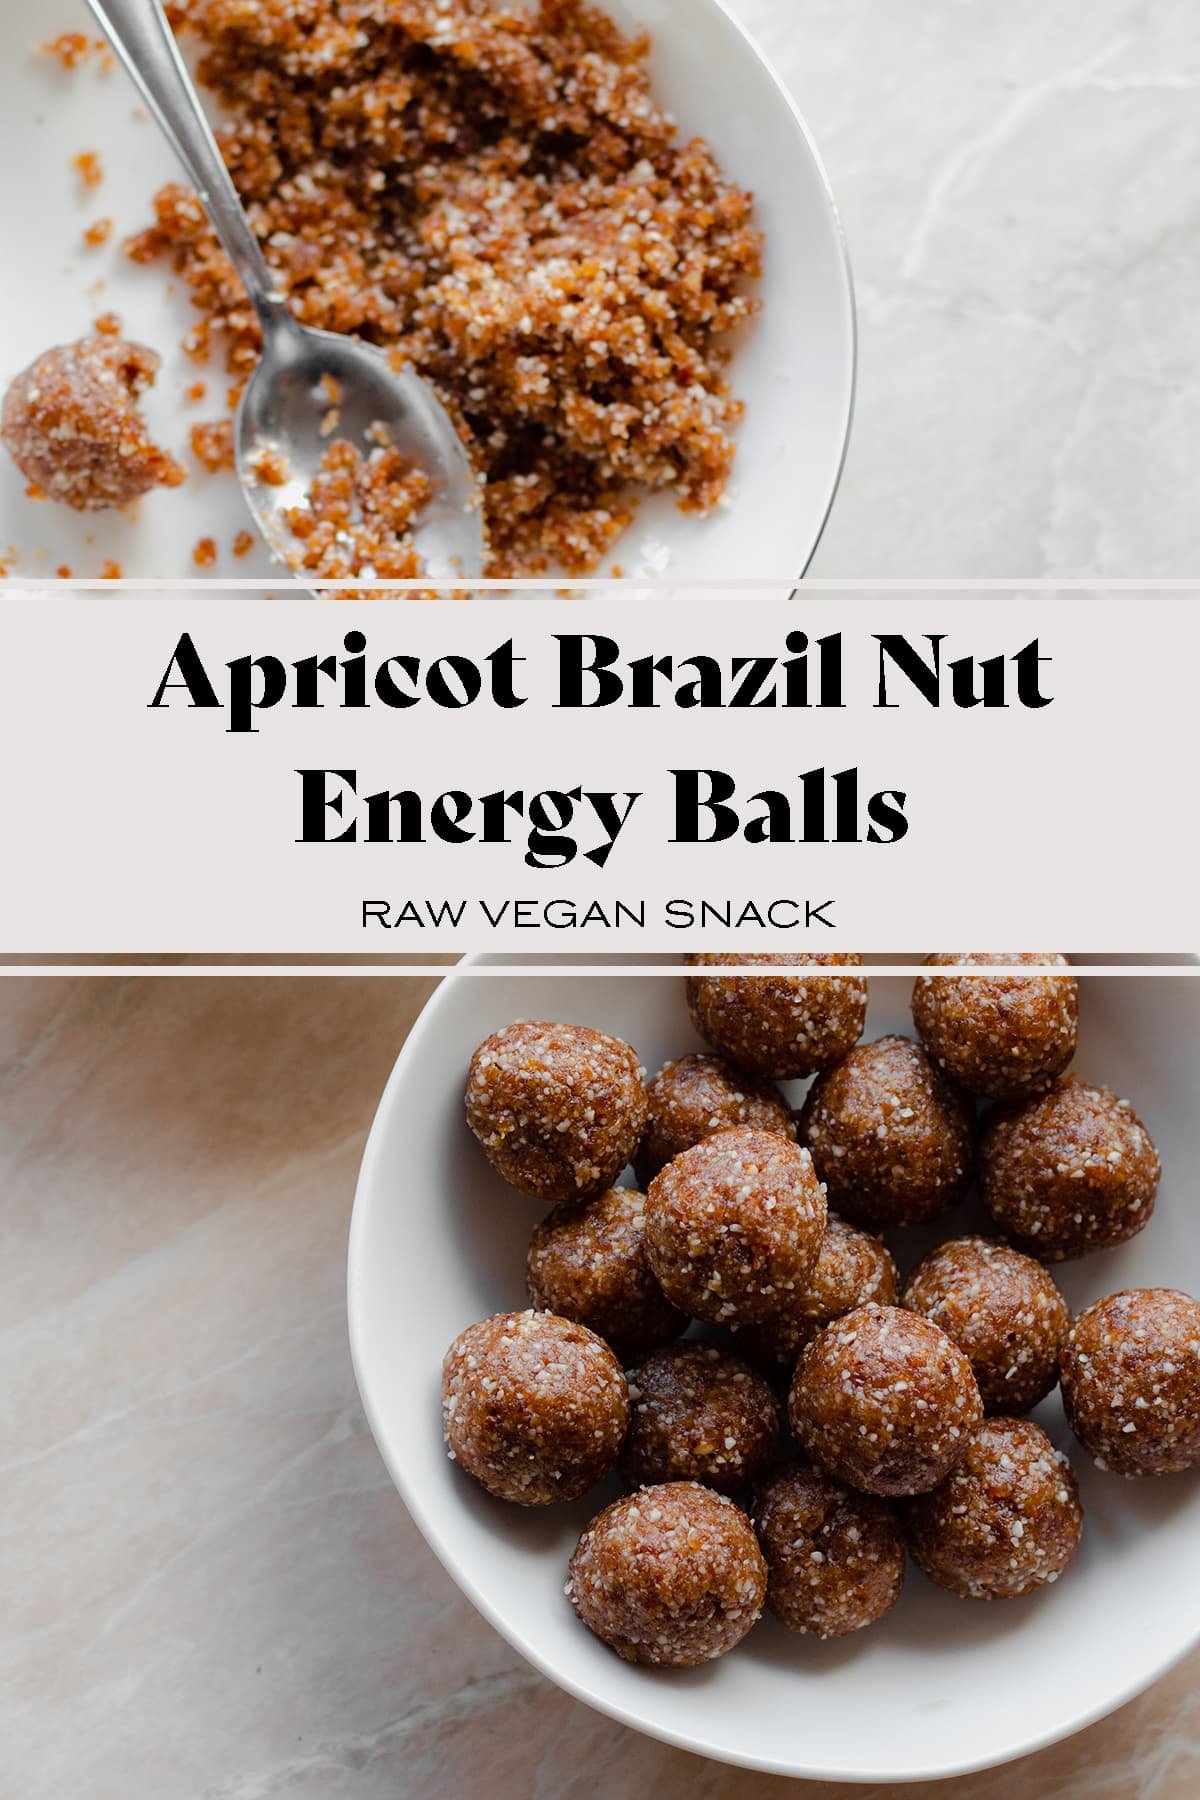 Apricot Brazil Nut Energy Balls